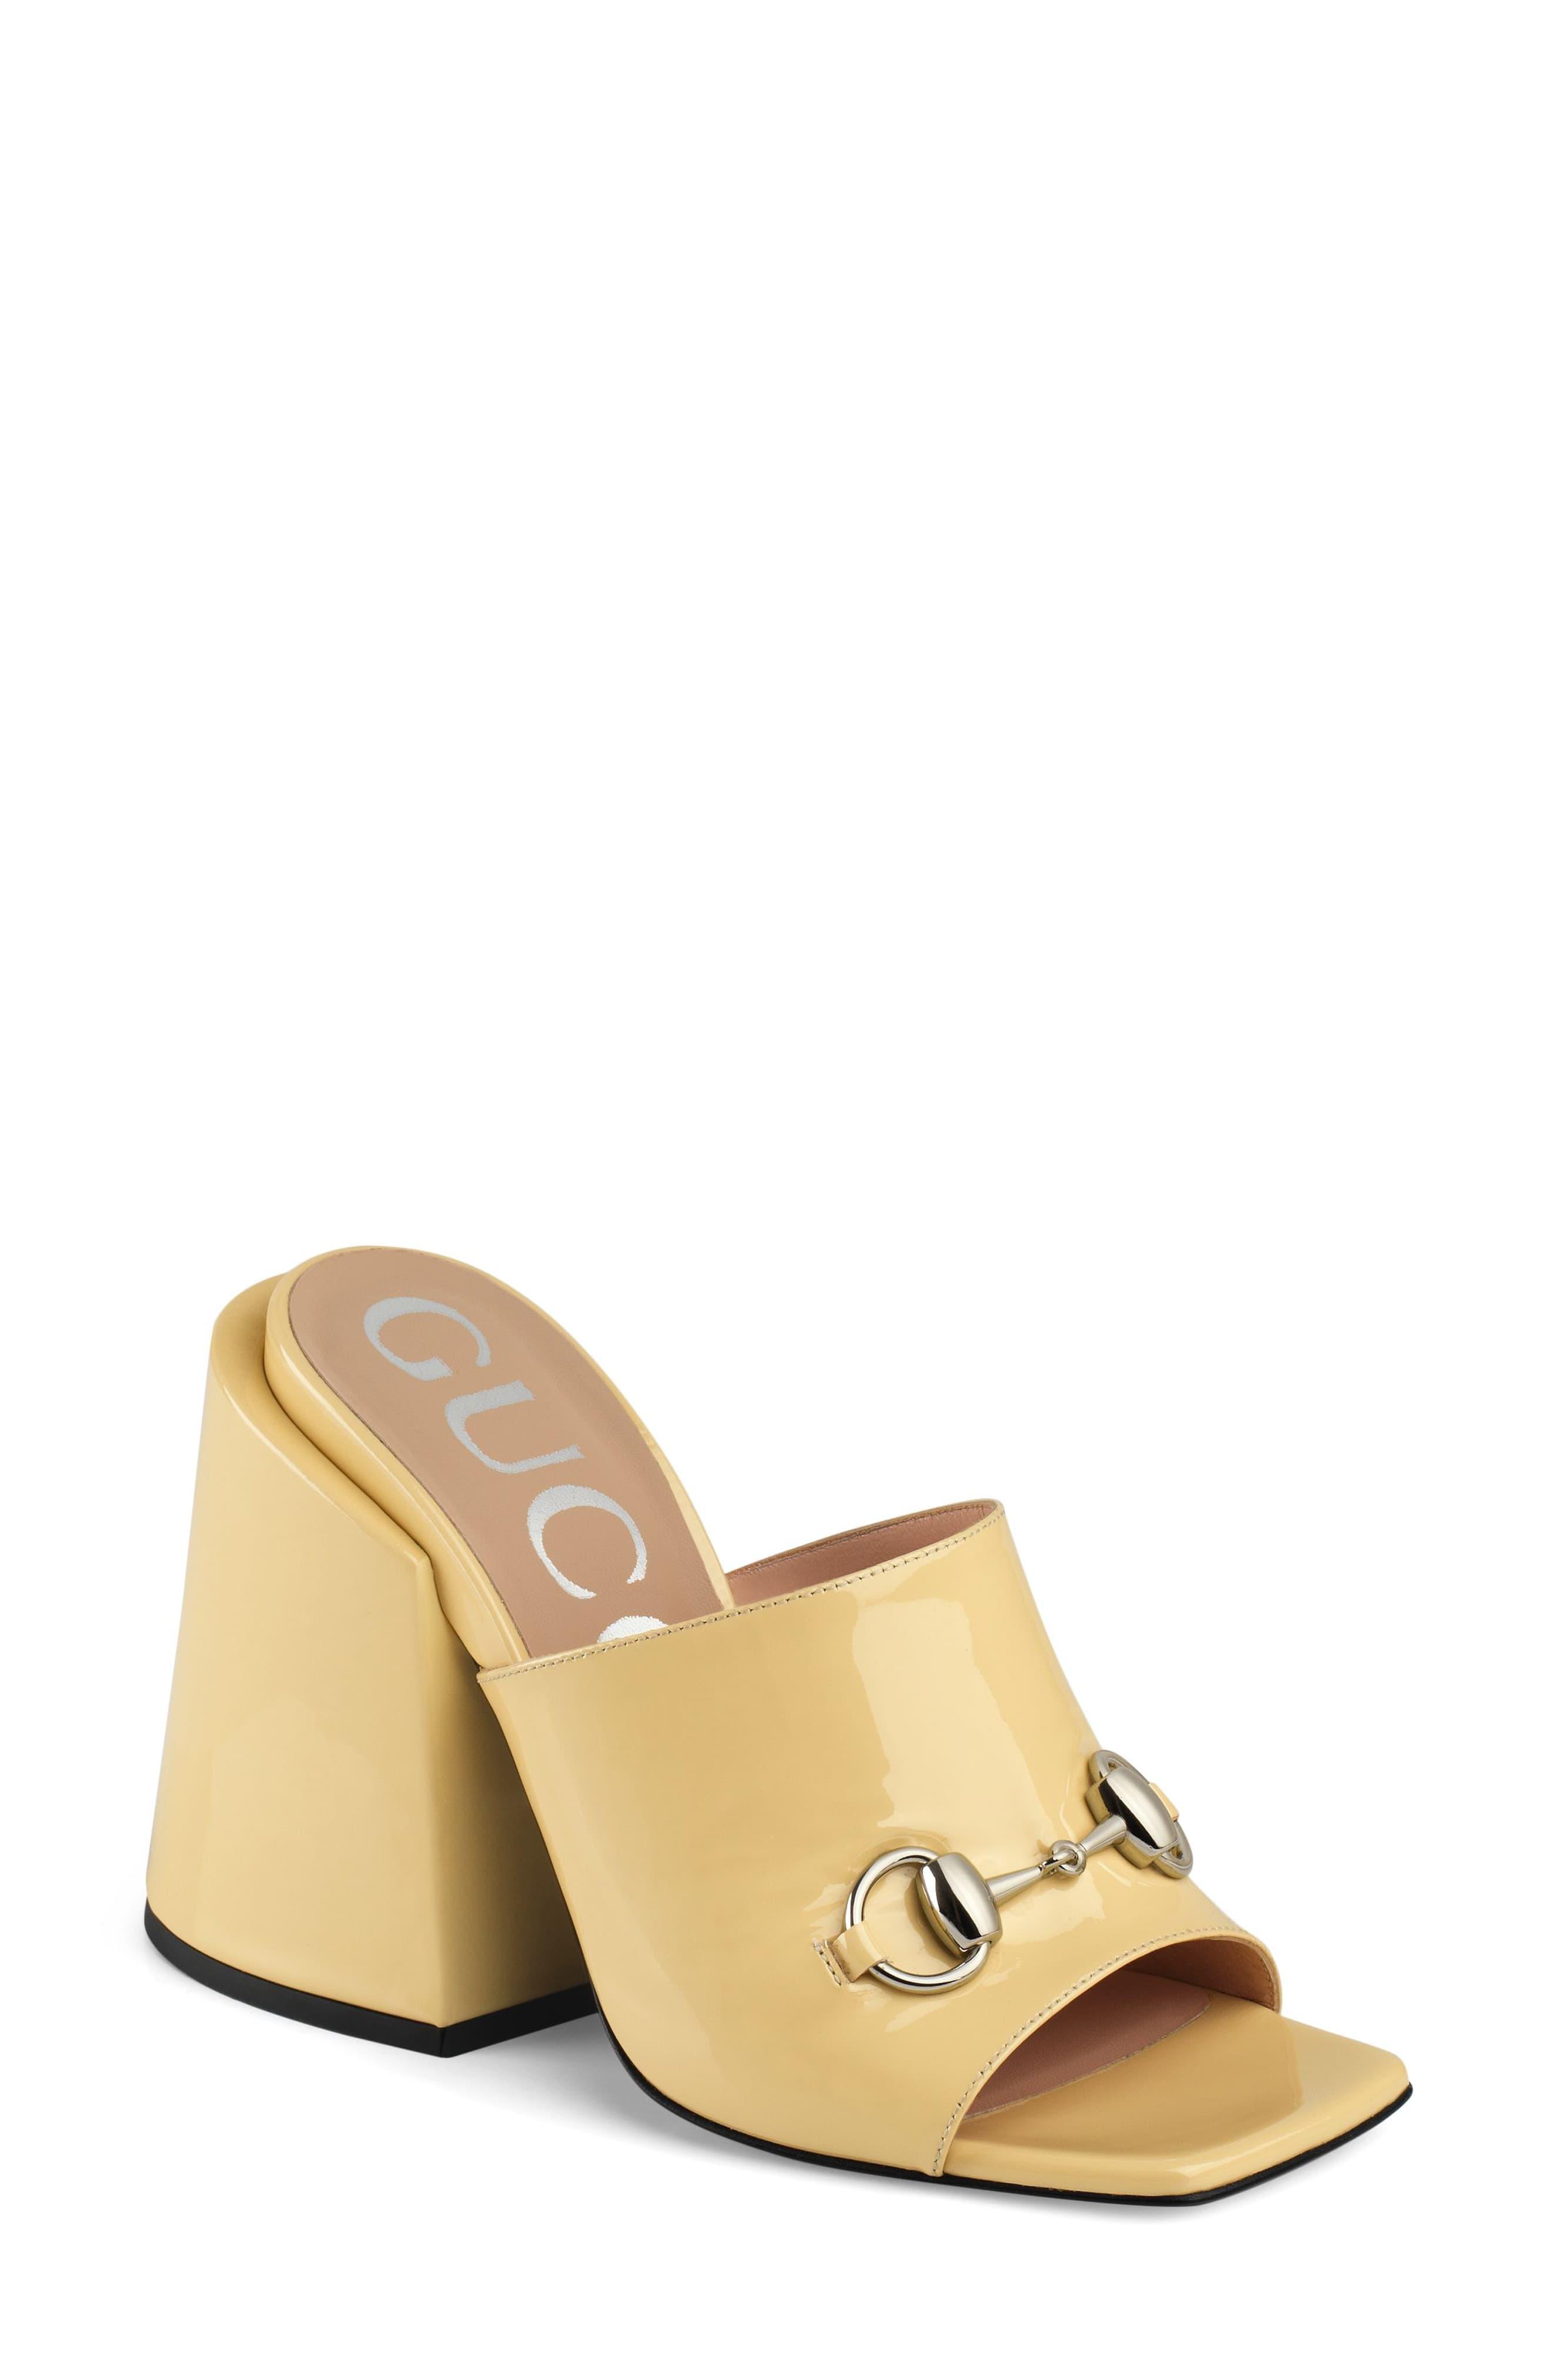 Gucci Lexi Slide Sandal in Natural - Lyst